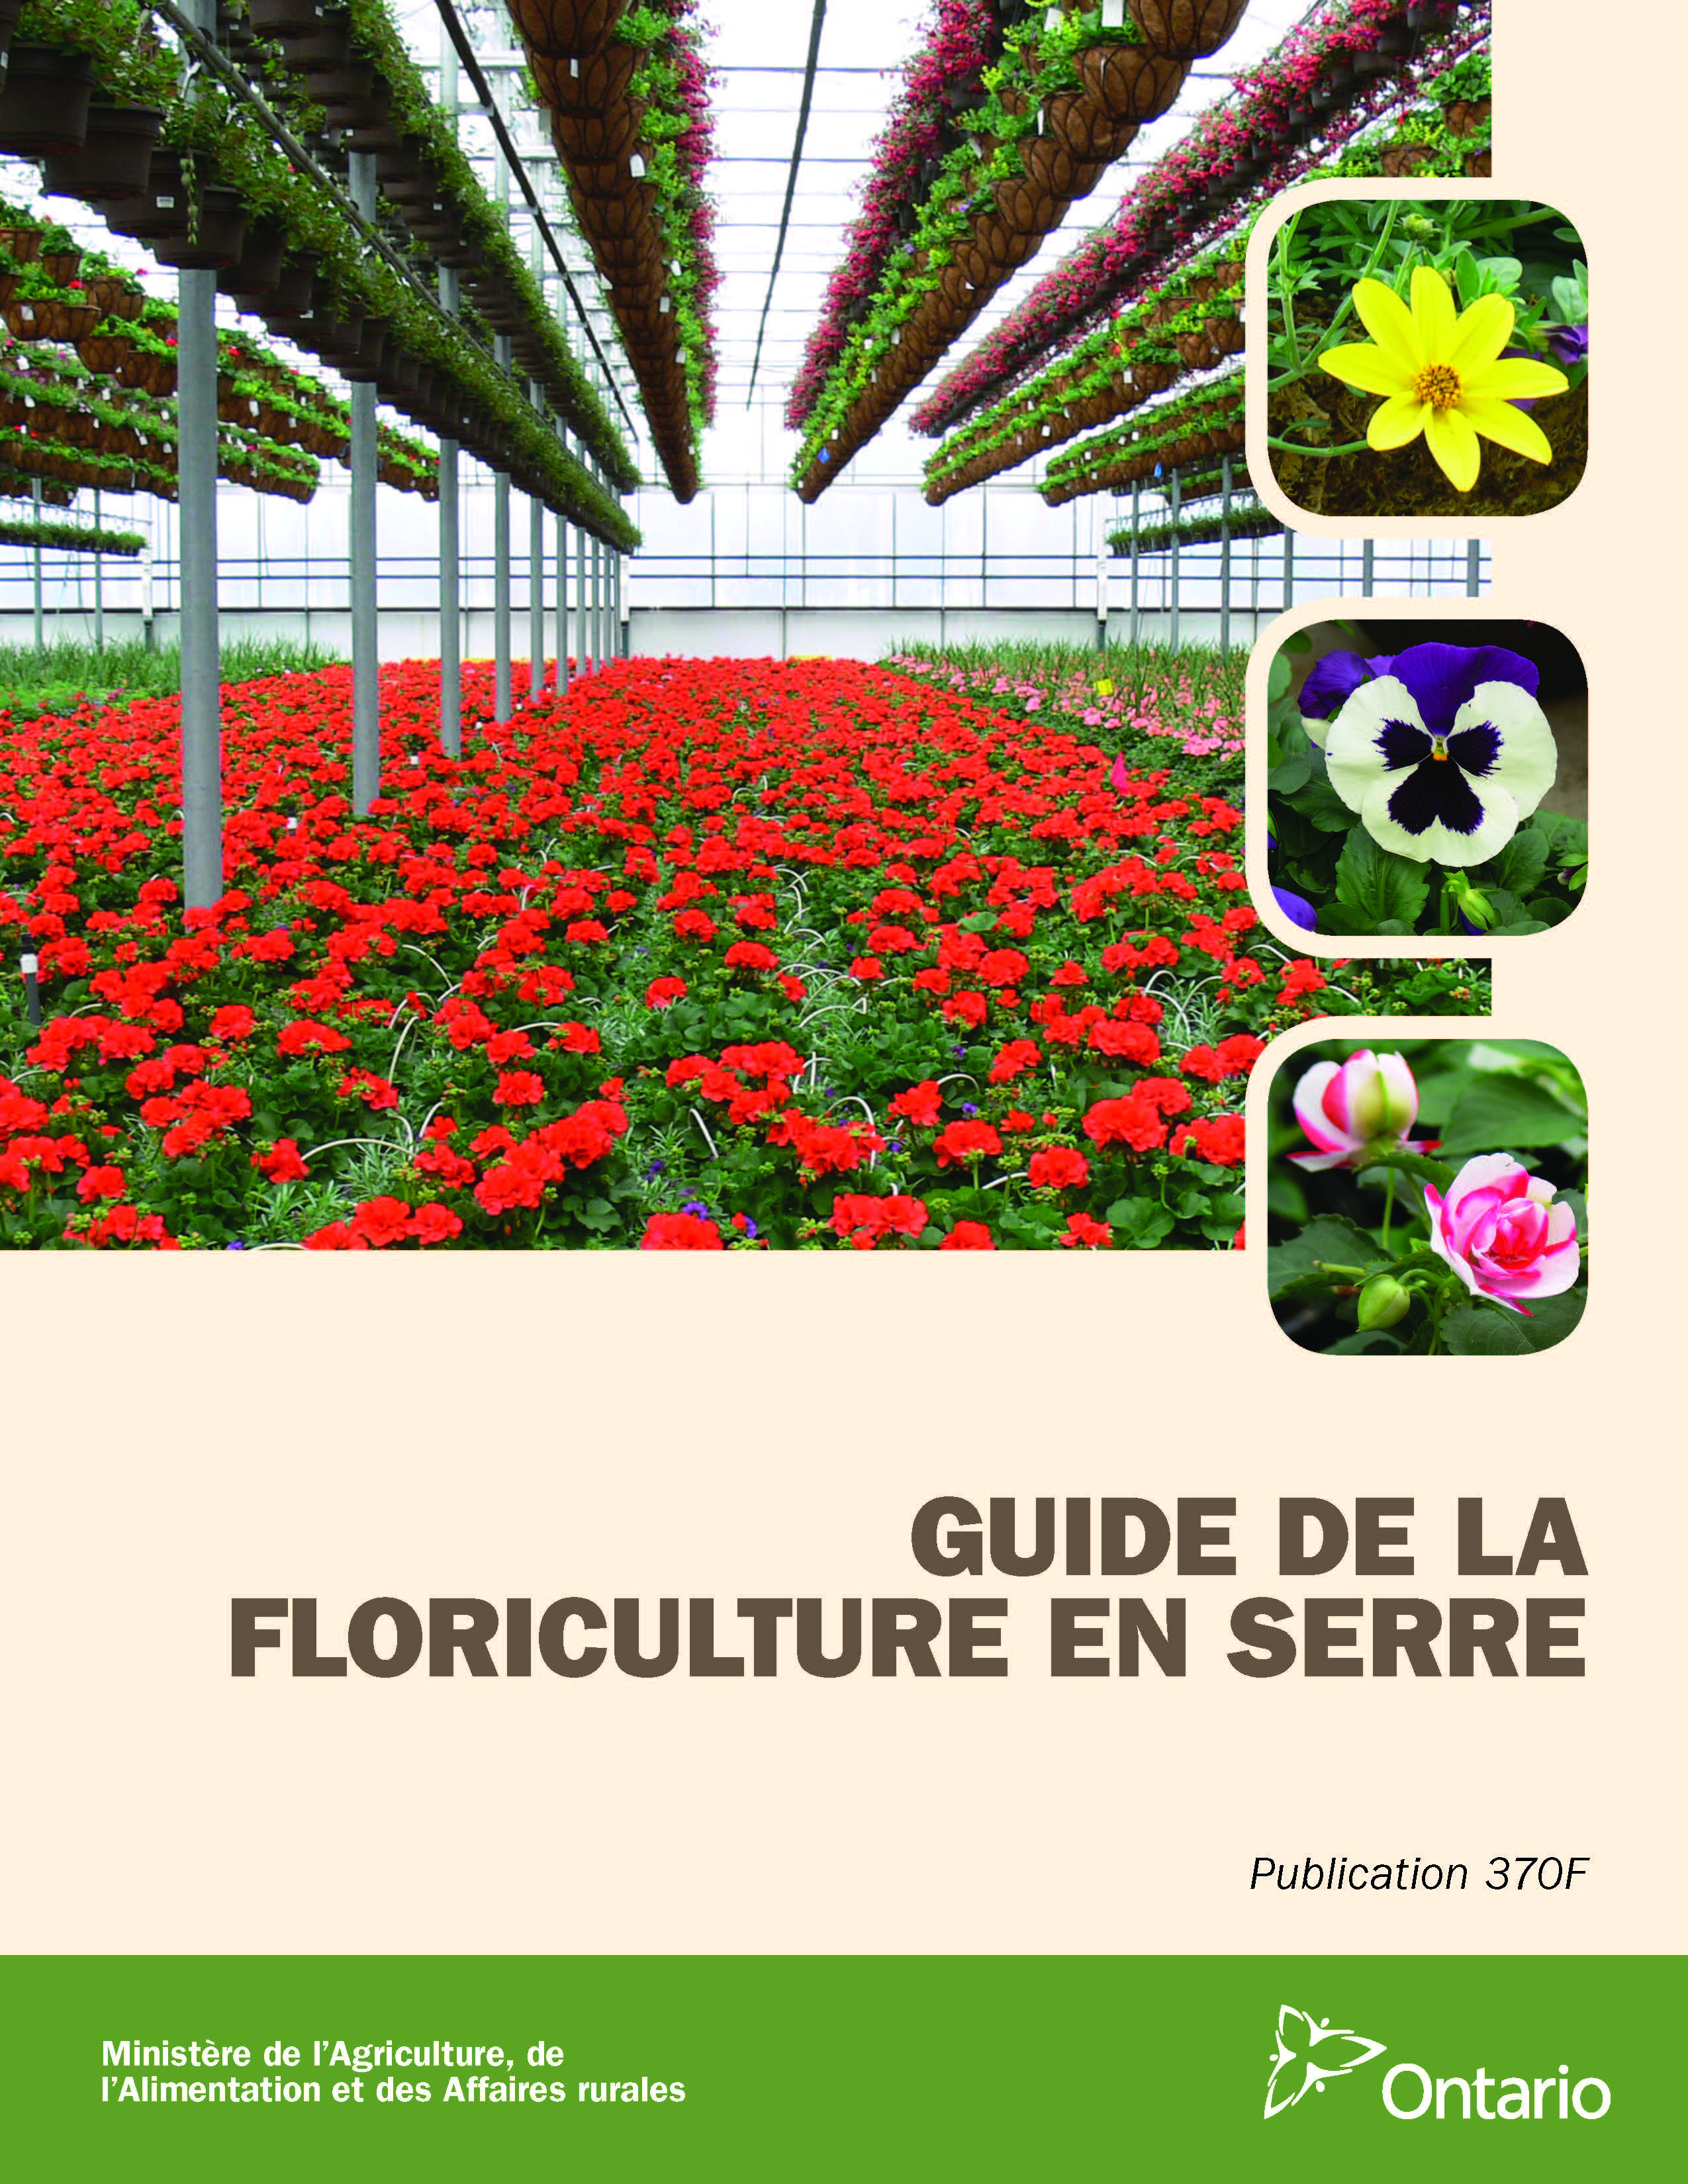 Guide de la floriculture en serre